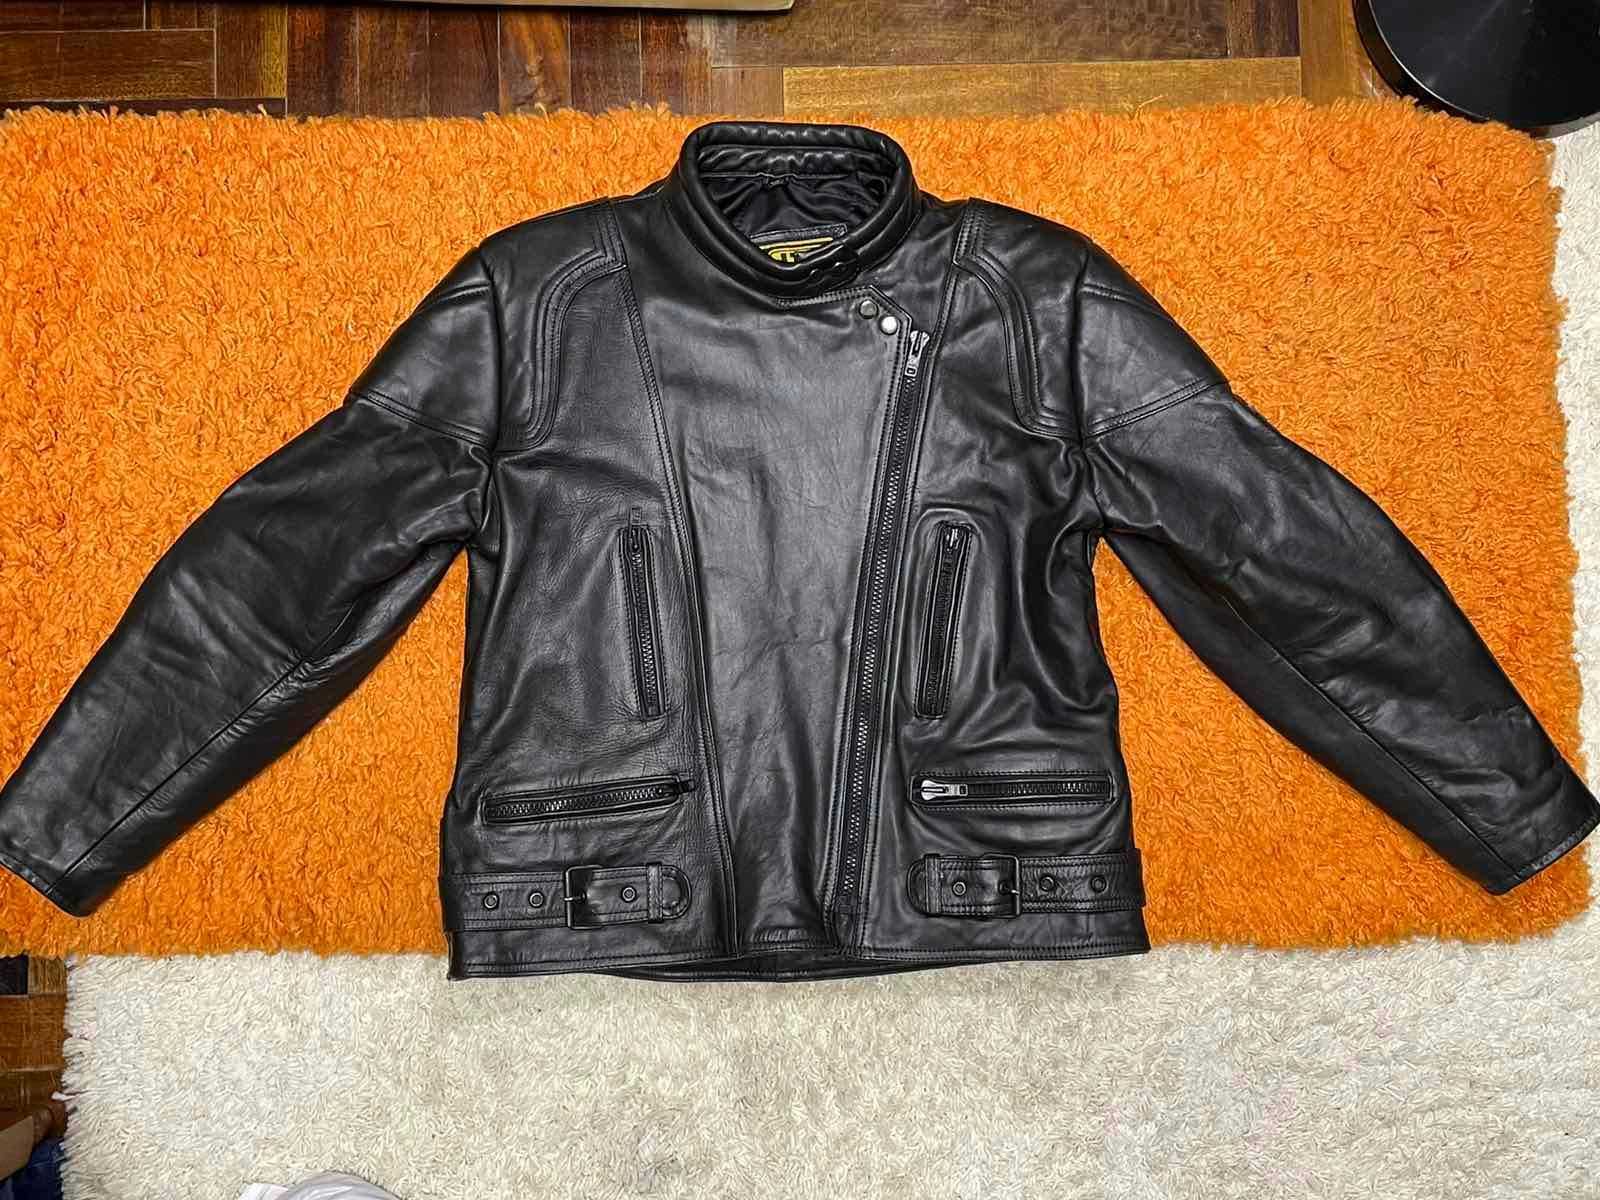 JTS мотокуртка XL-XXL косуха кожа sidi ixs dainese куртка мото кожаная